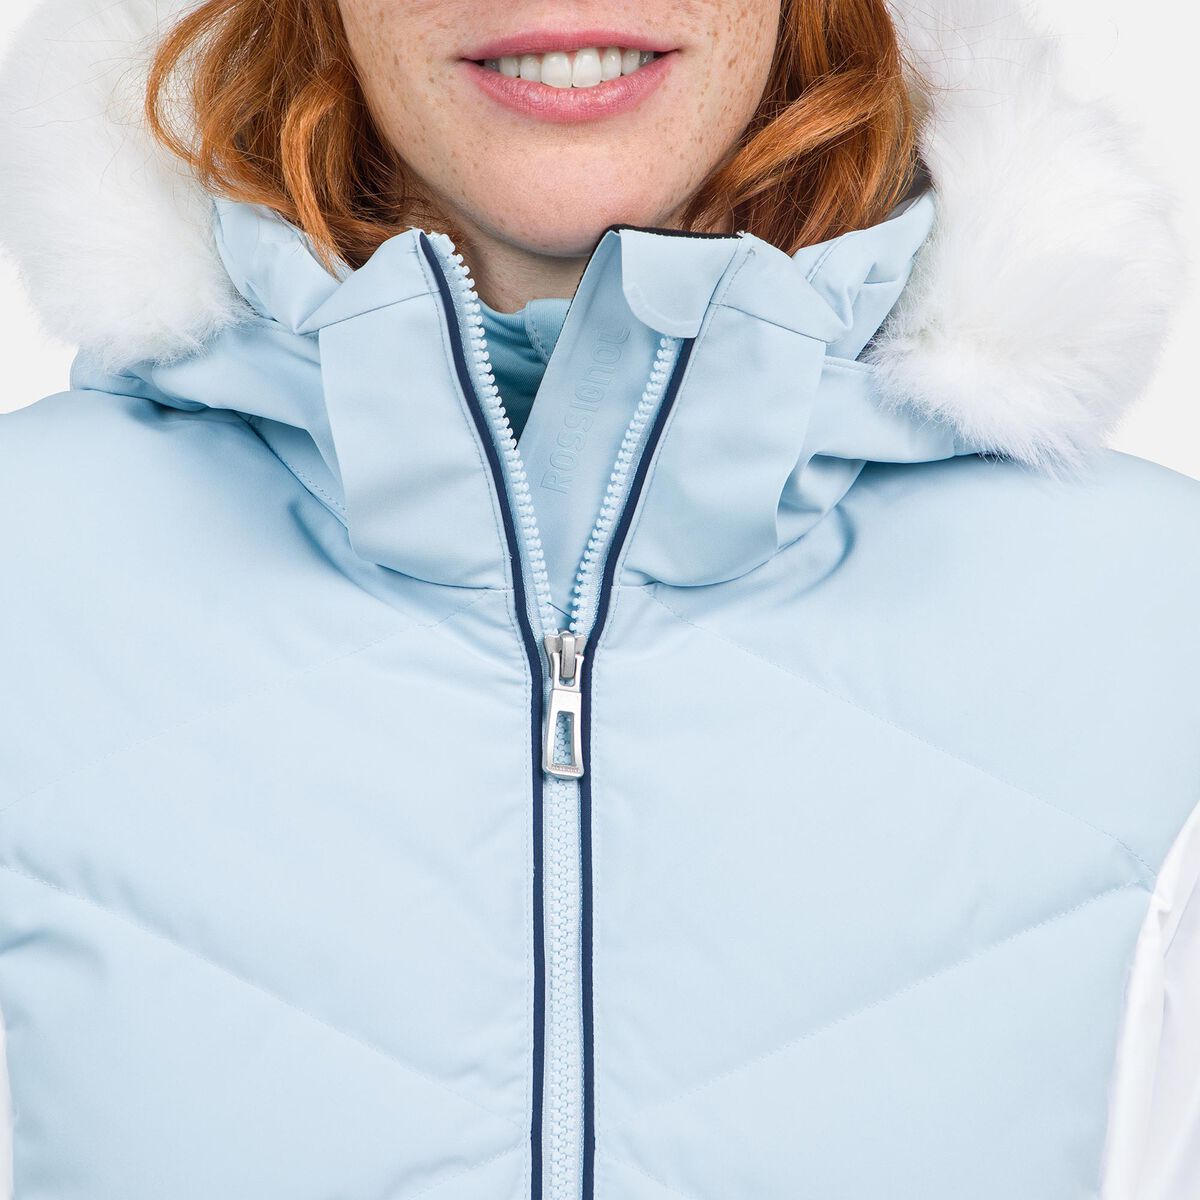 Rossignol Women's Staci Ski Jacket blue